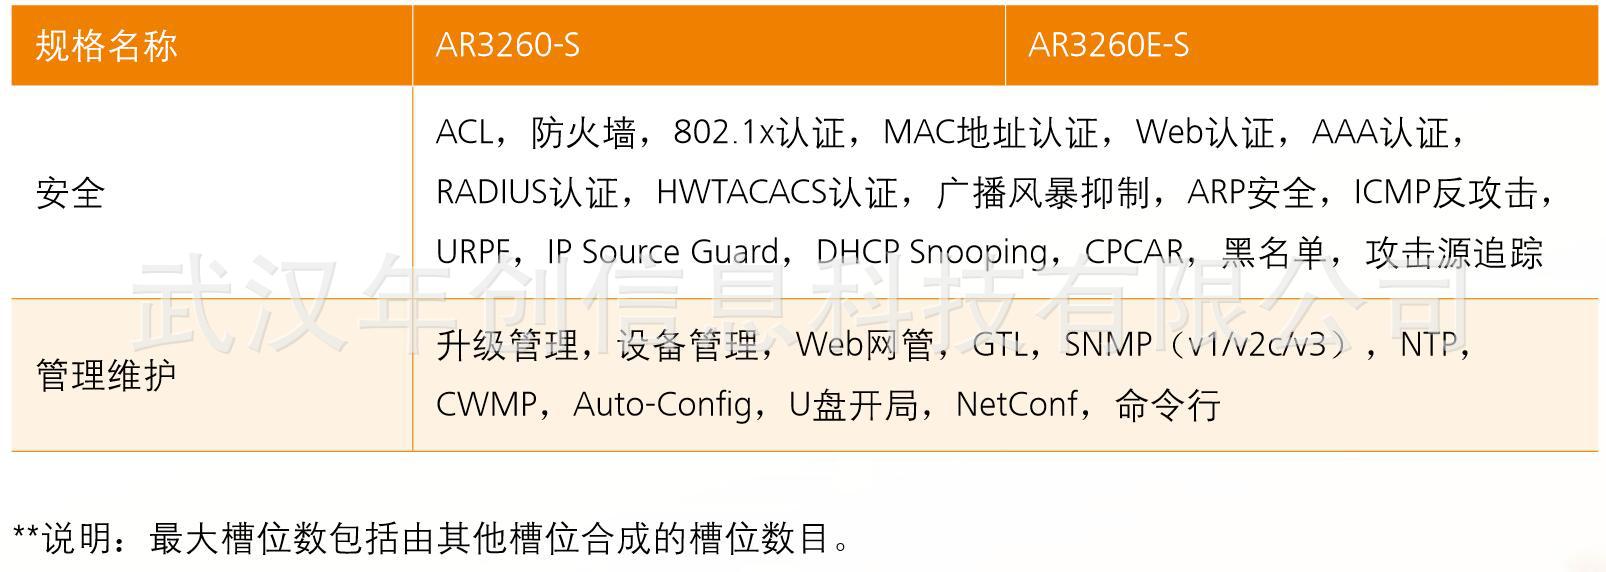 AR3260-S  3*GE(2*Combo)高端企业级集成路由器示例图17